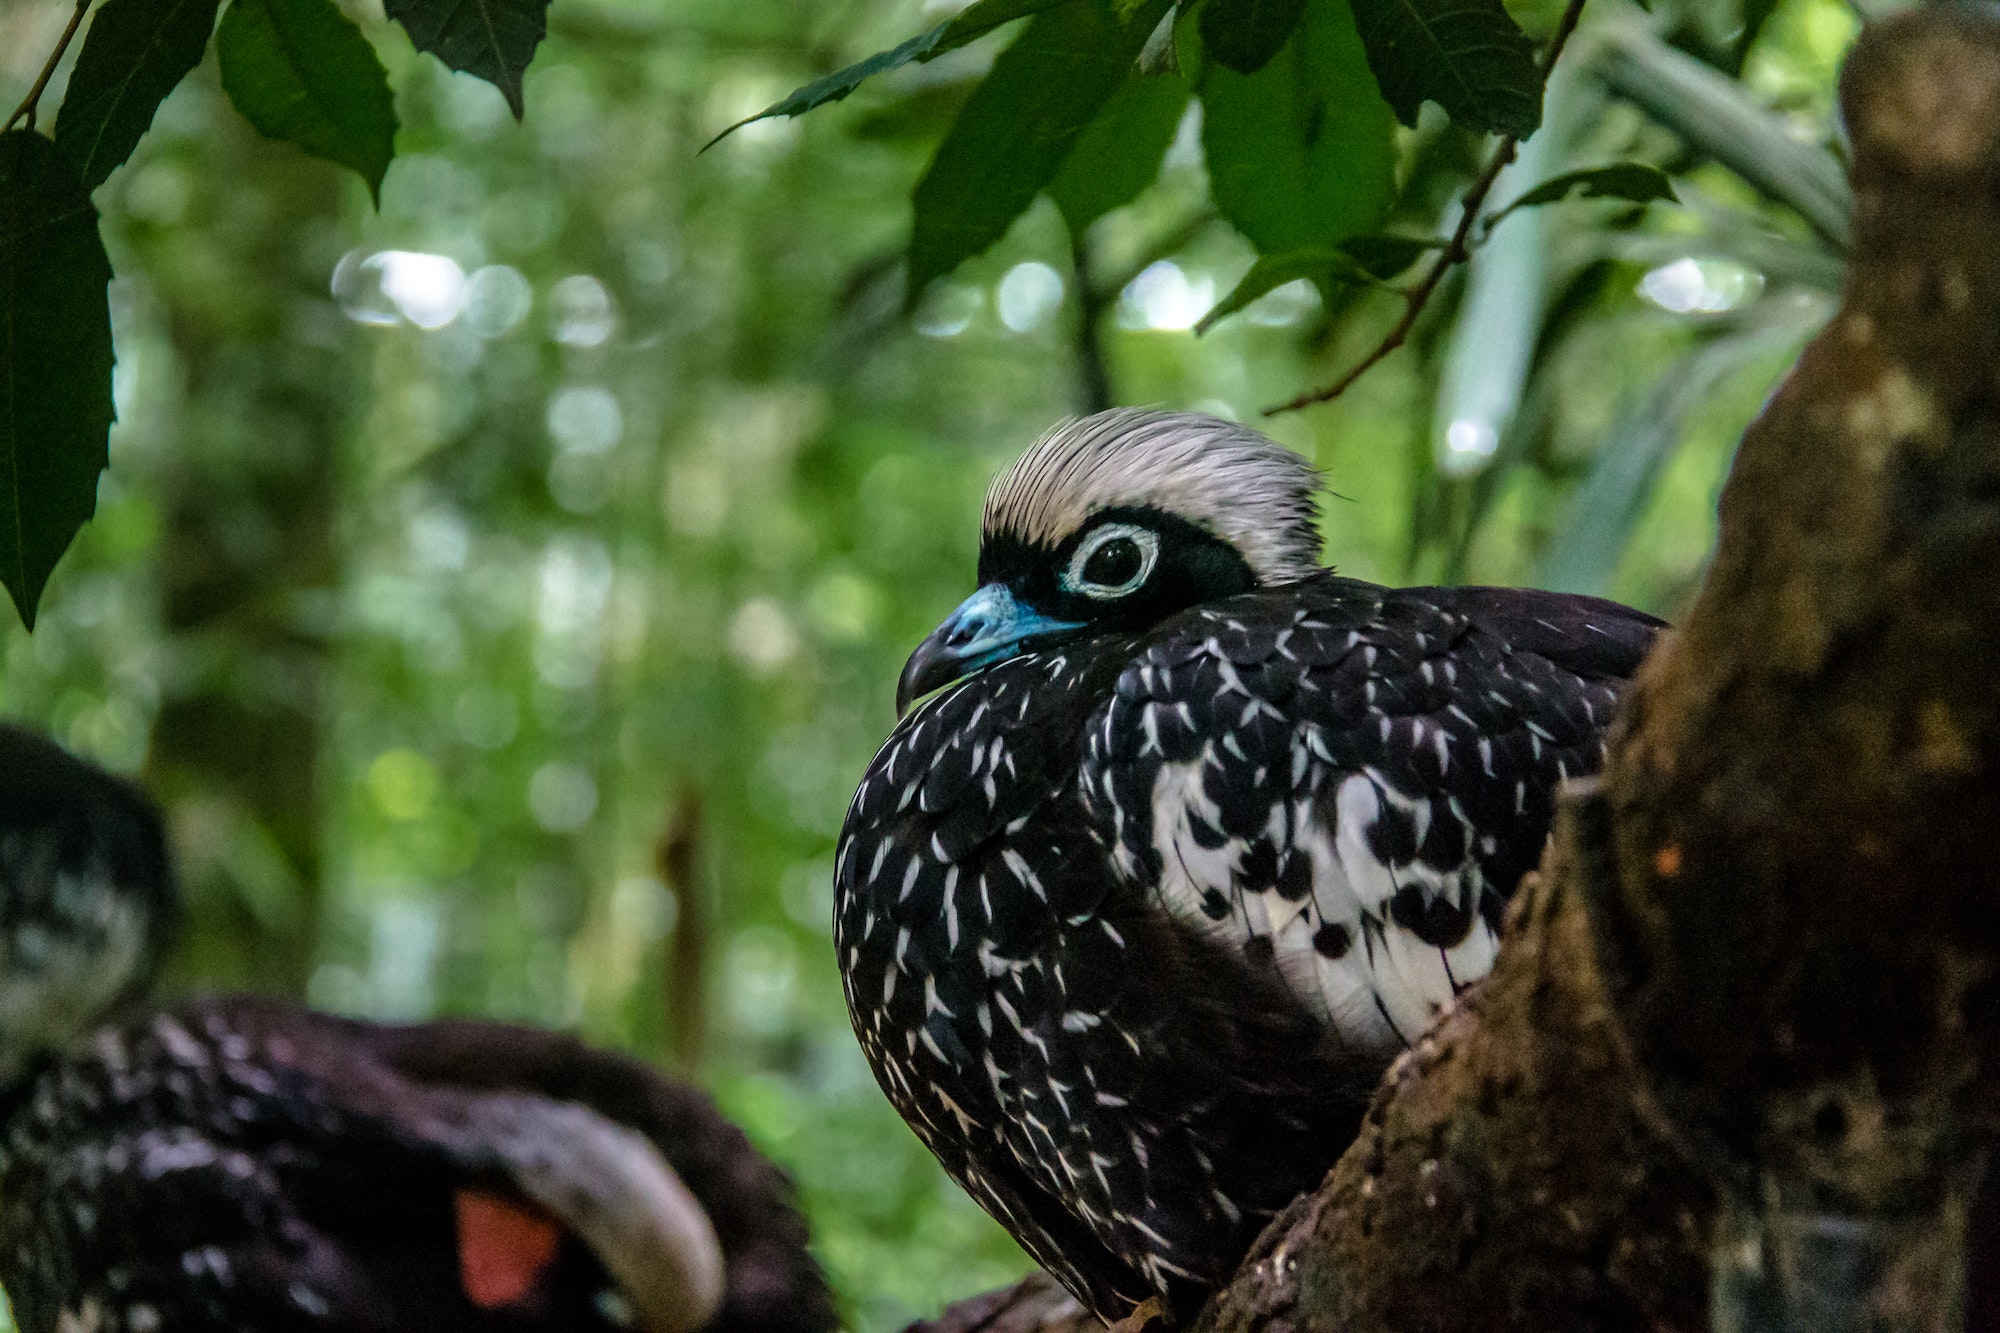 Black-fronted Piping Guan or Jacutinga at Parque das Aves - Foz do Iguacu, Parana, Brazil